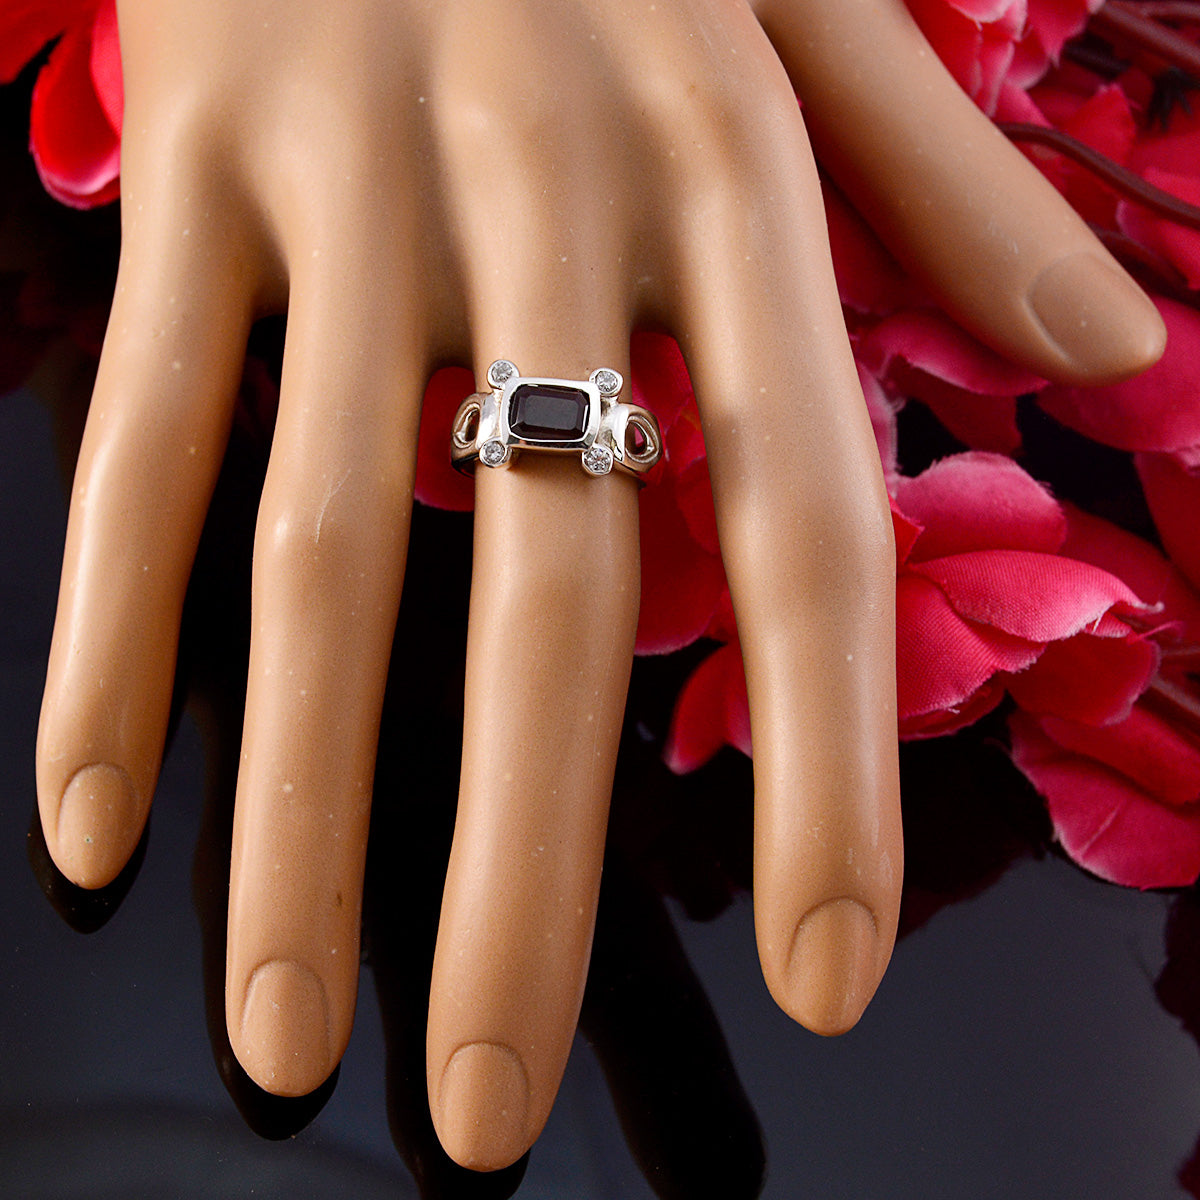 Riyo Winning Gemstones Garnet Solid Silver Rings Gift For Girls